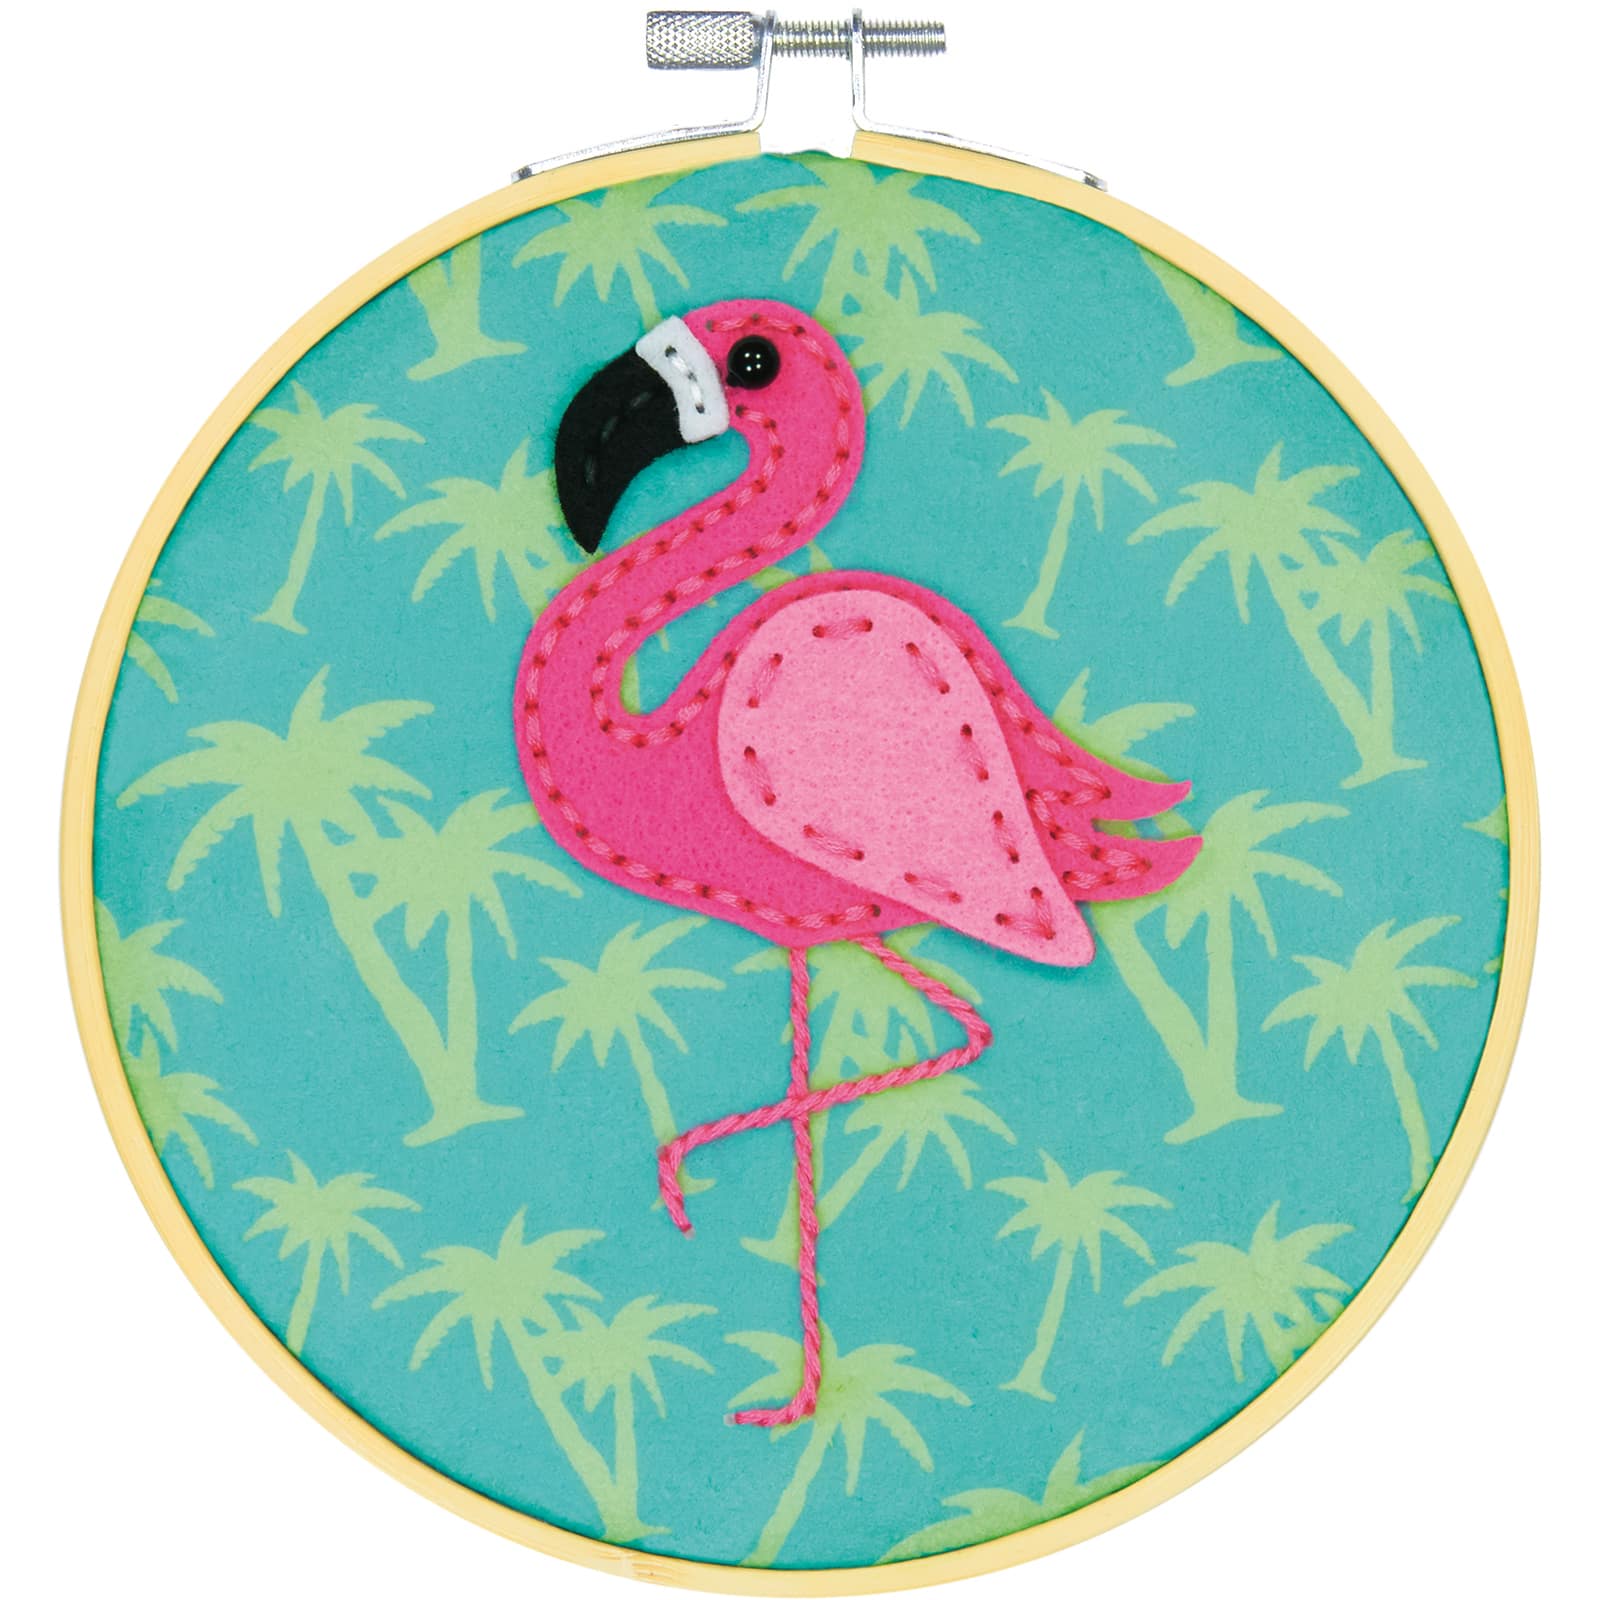 Download Buy The Dimensions Felt Applique Kit Tropical Flamingo At Michaels